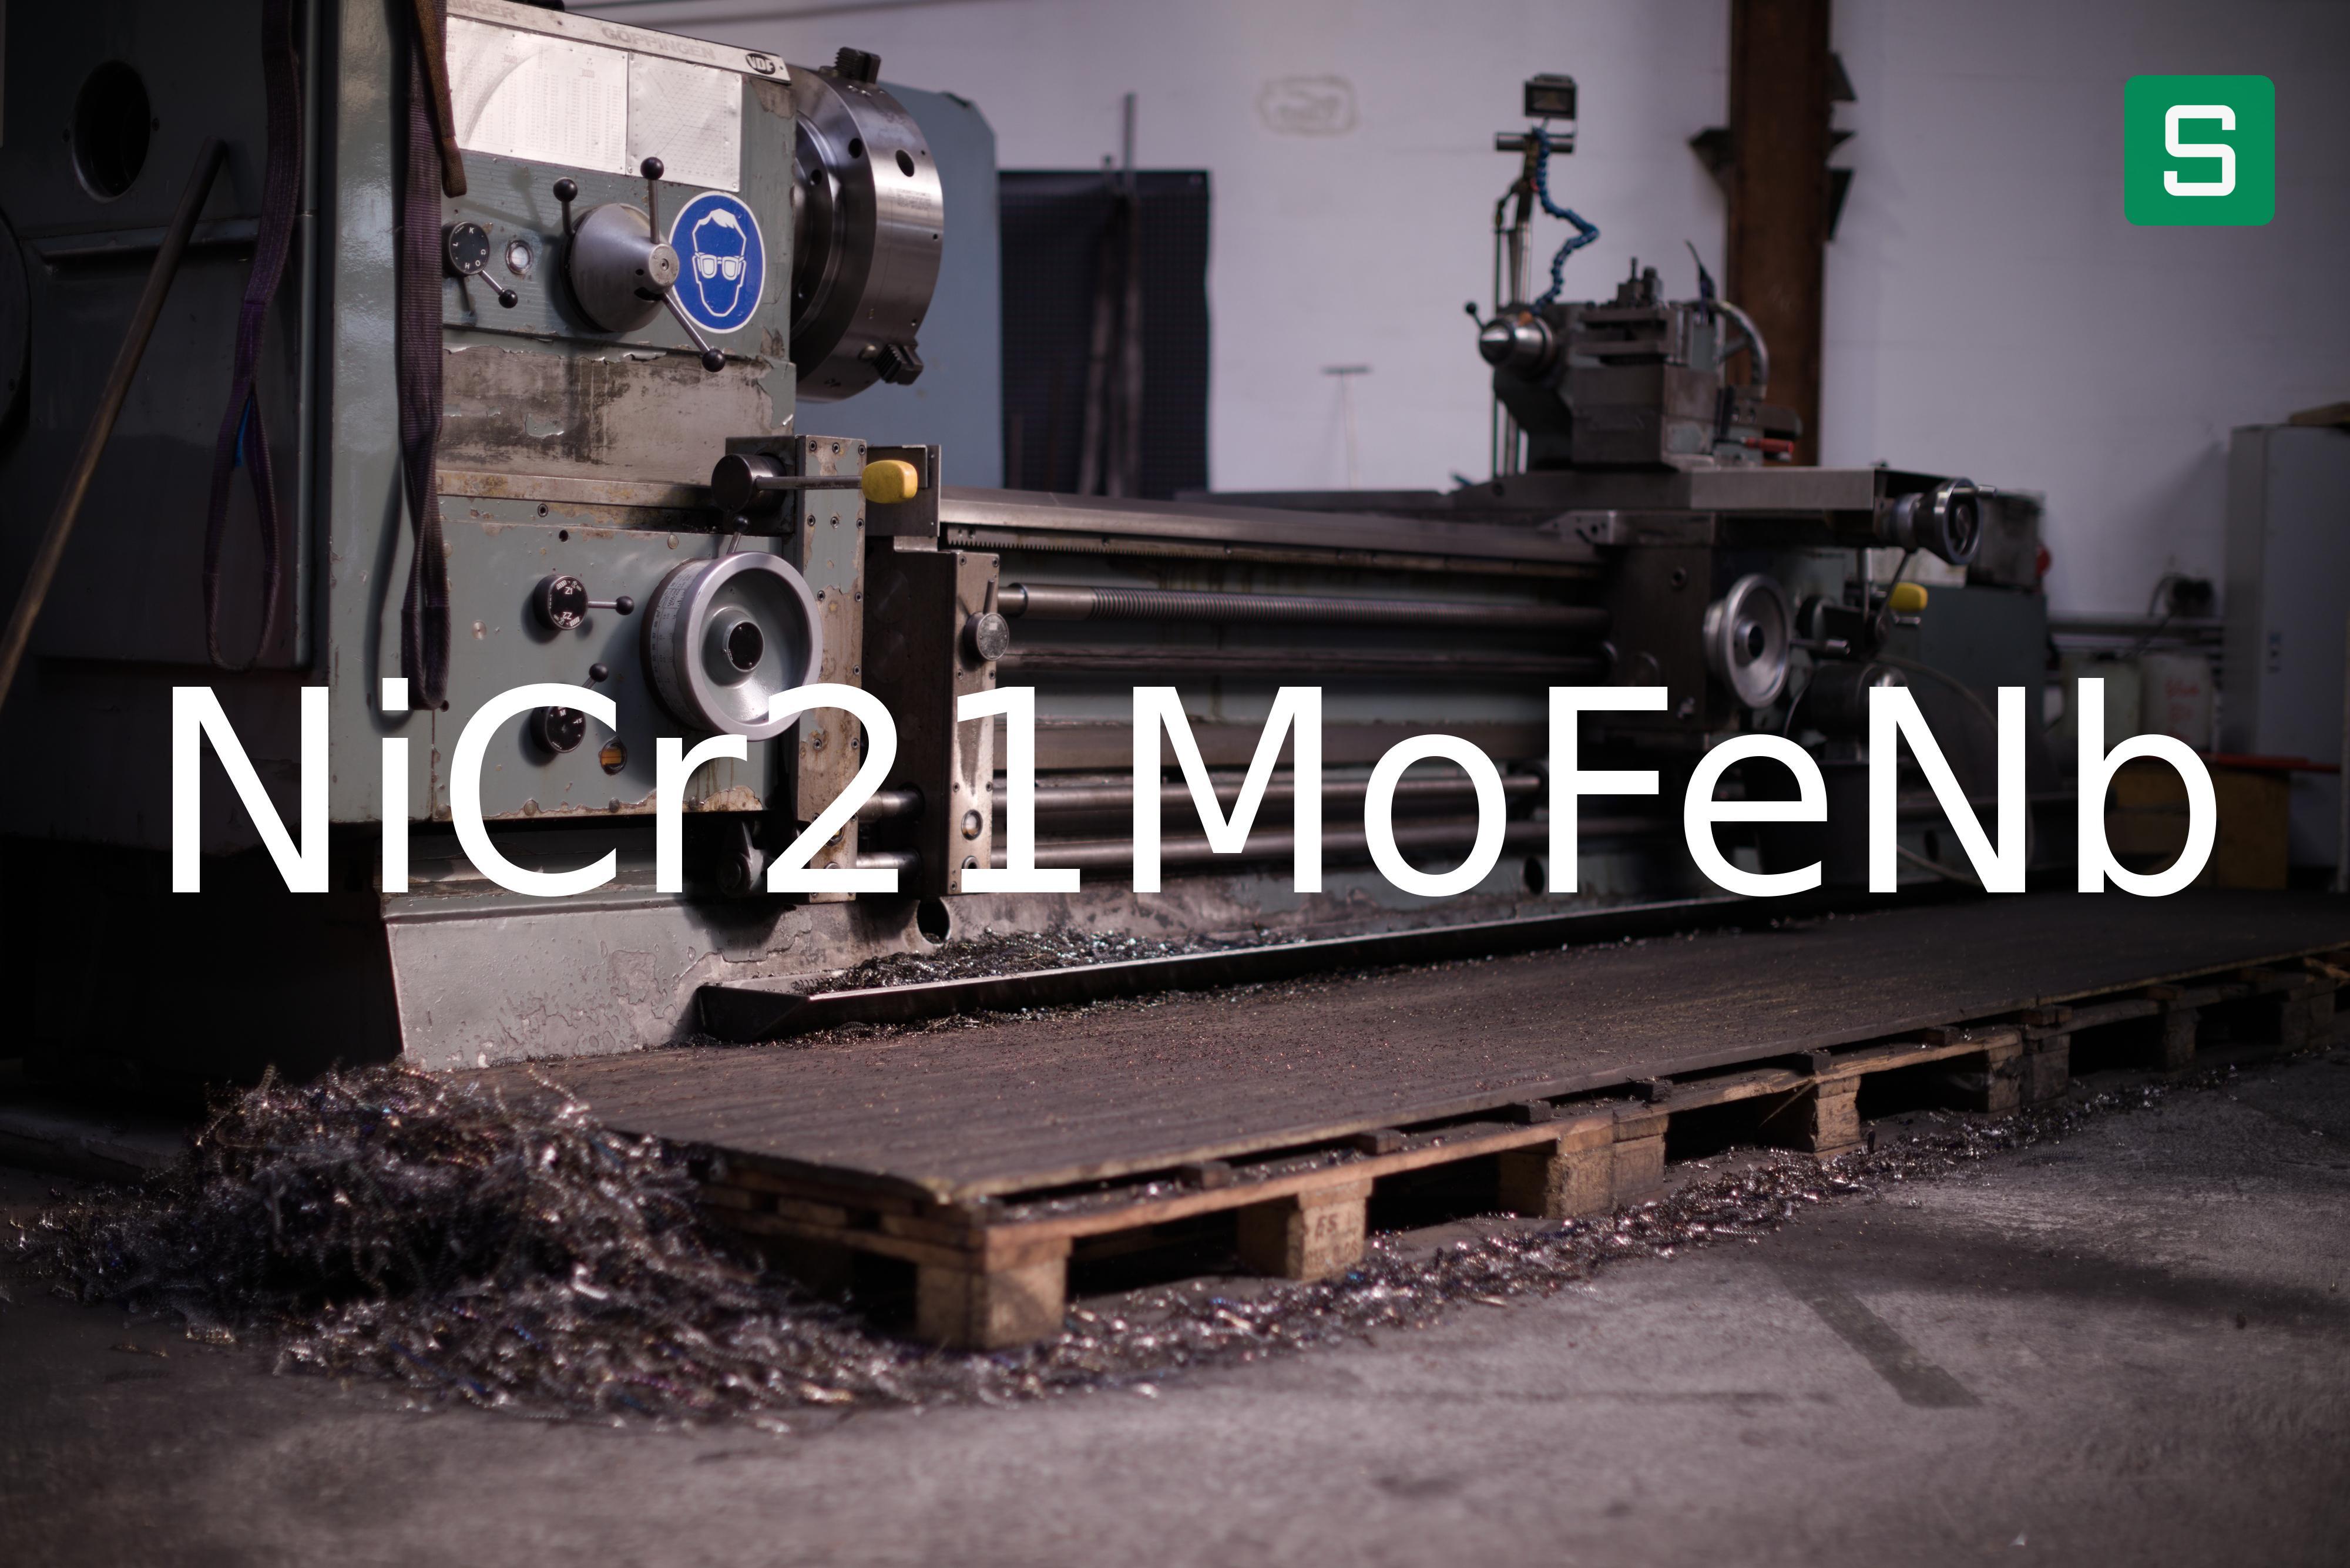 Steel Material: NiCr21MoFeNb